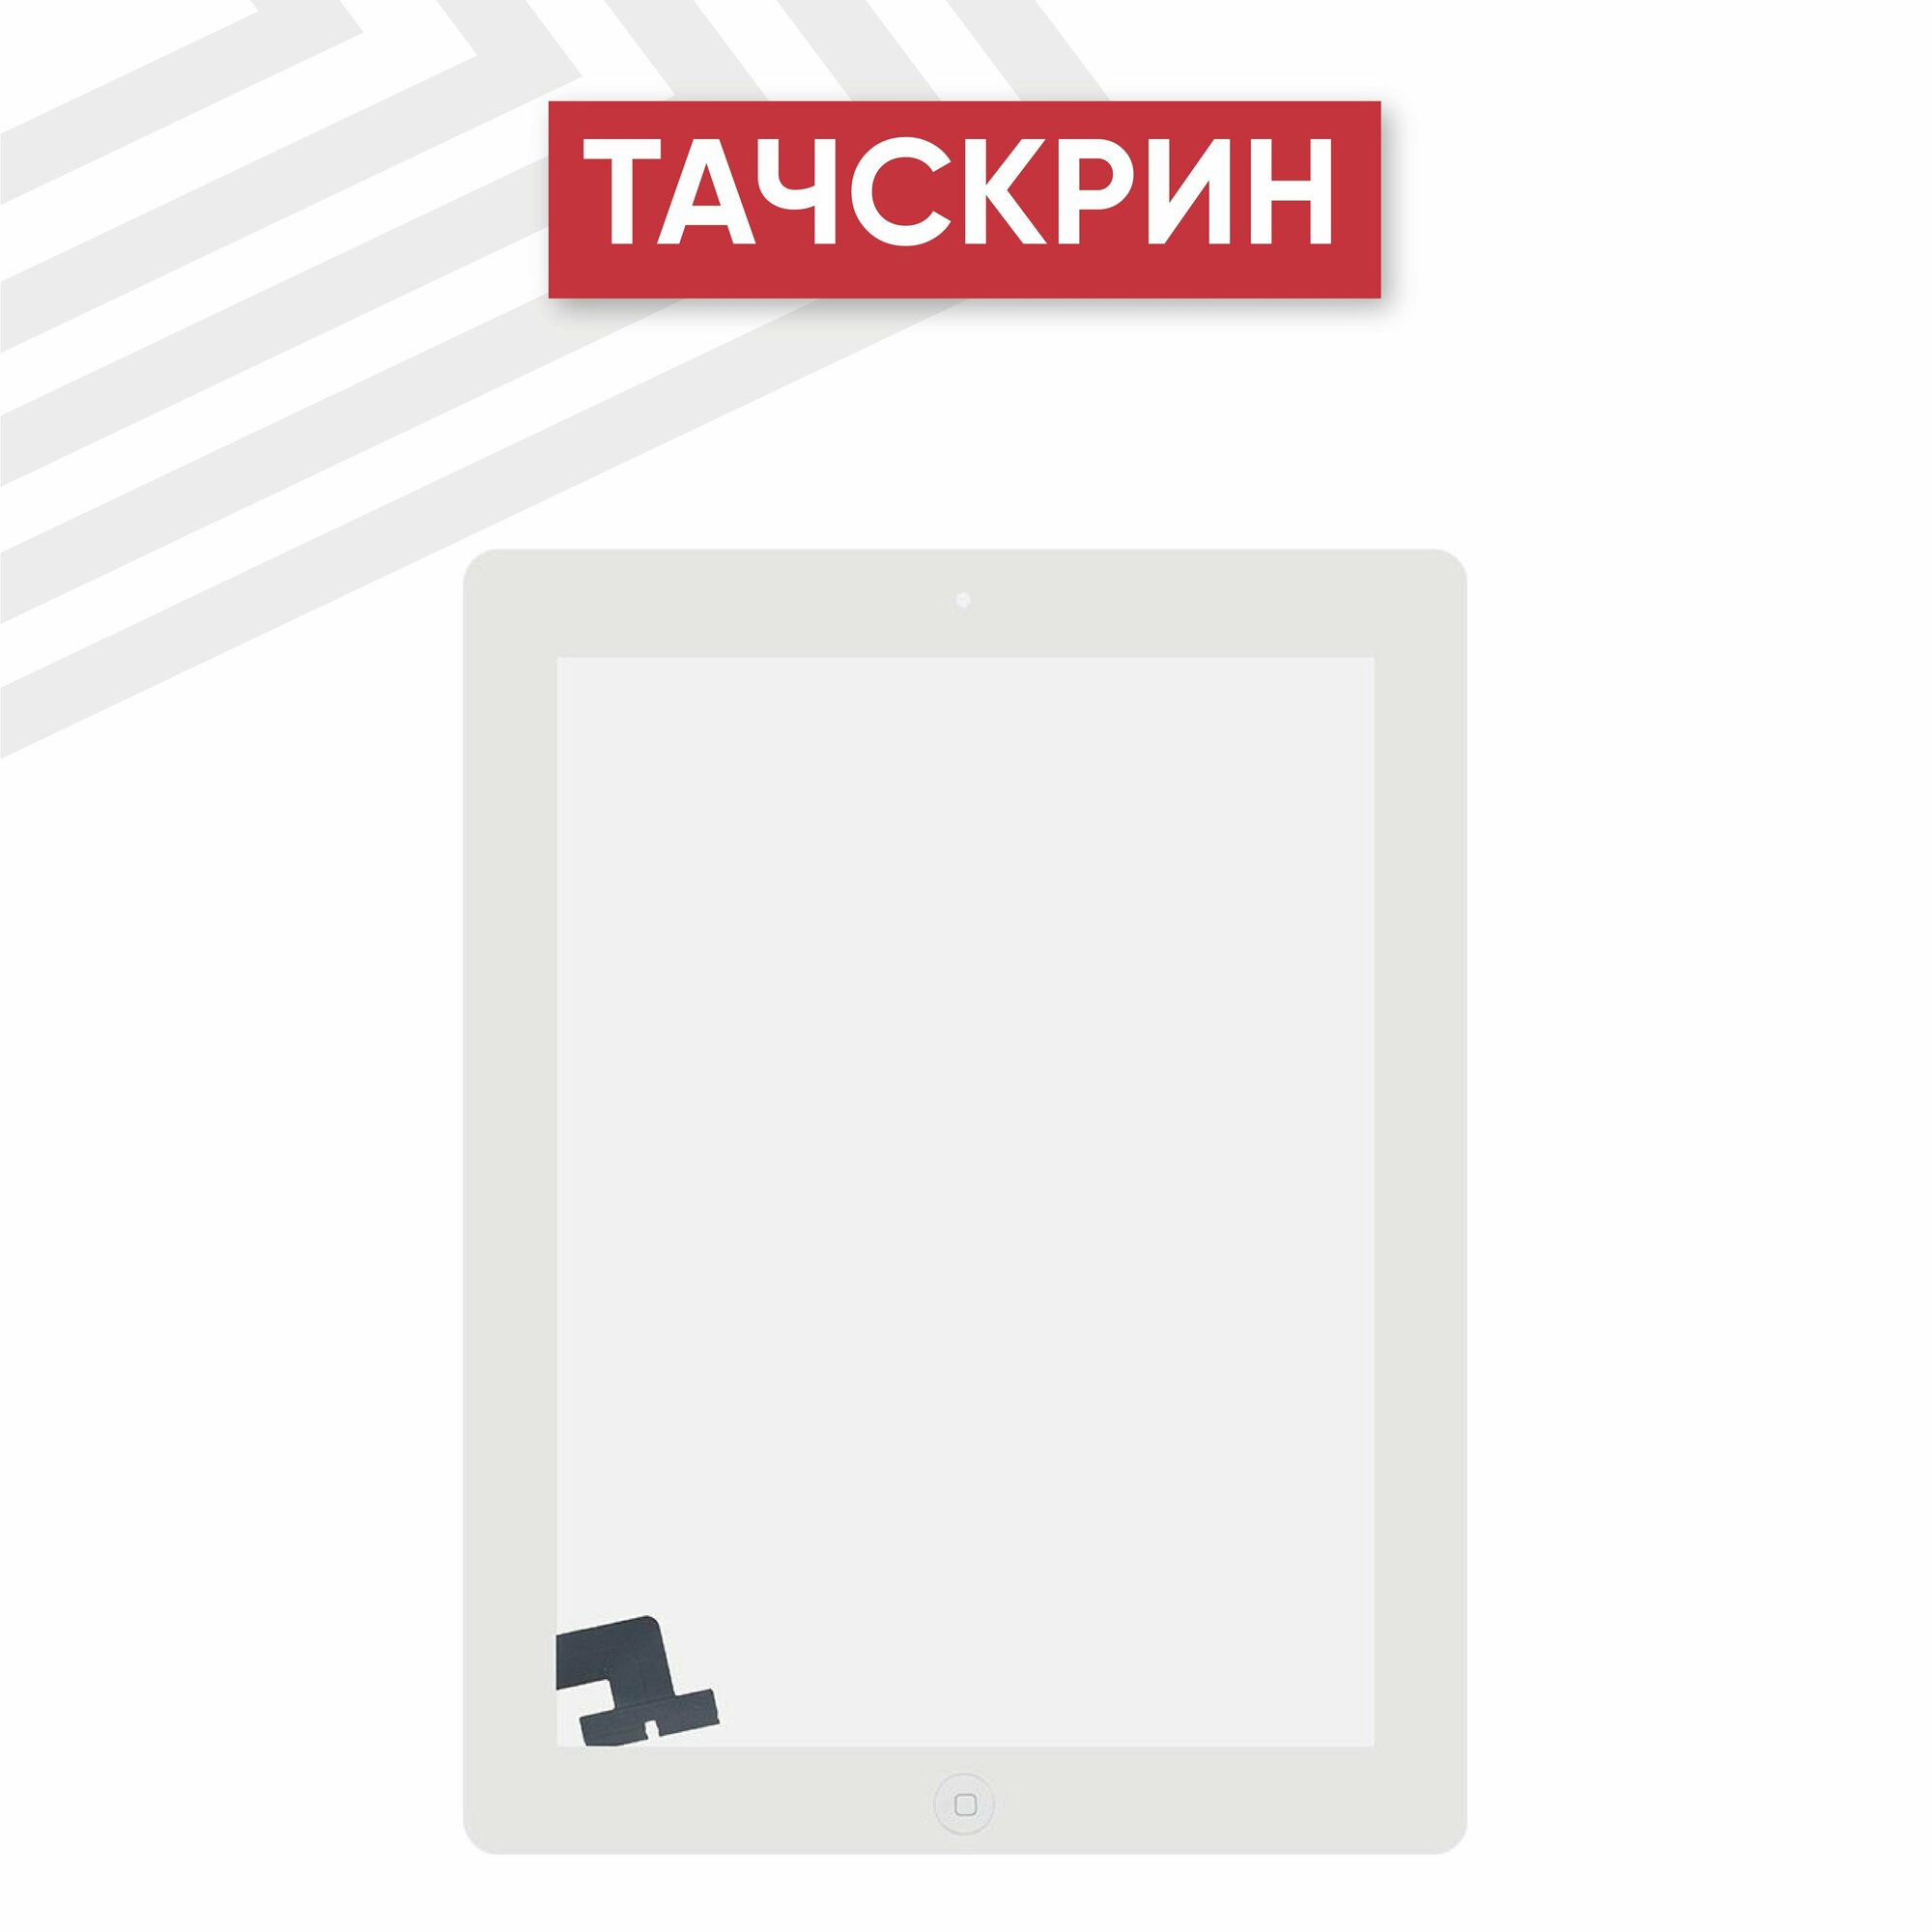 Тачскрин (сенсорное стекло) для планшета Apple iPad 2 (A1395, A1396, A1397) с кнопкой Home, класс ААА, 9.7", белый